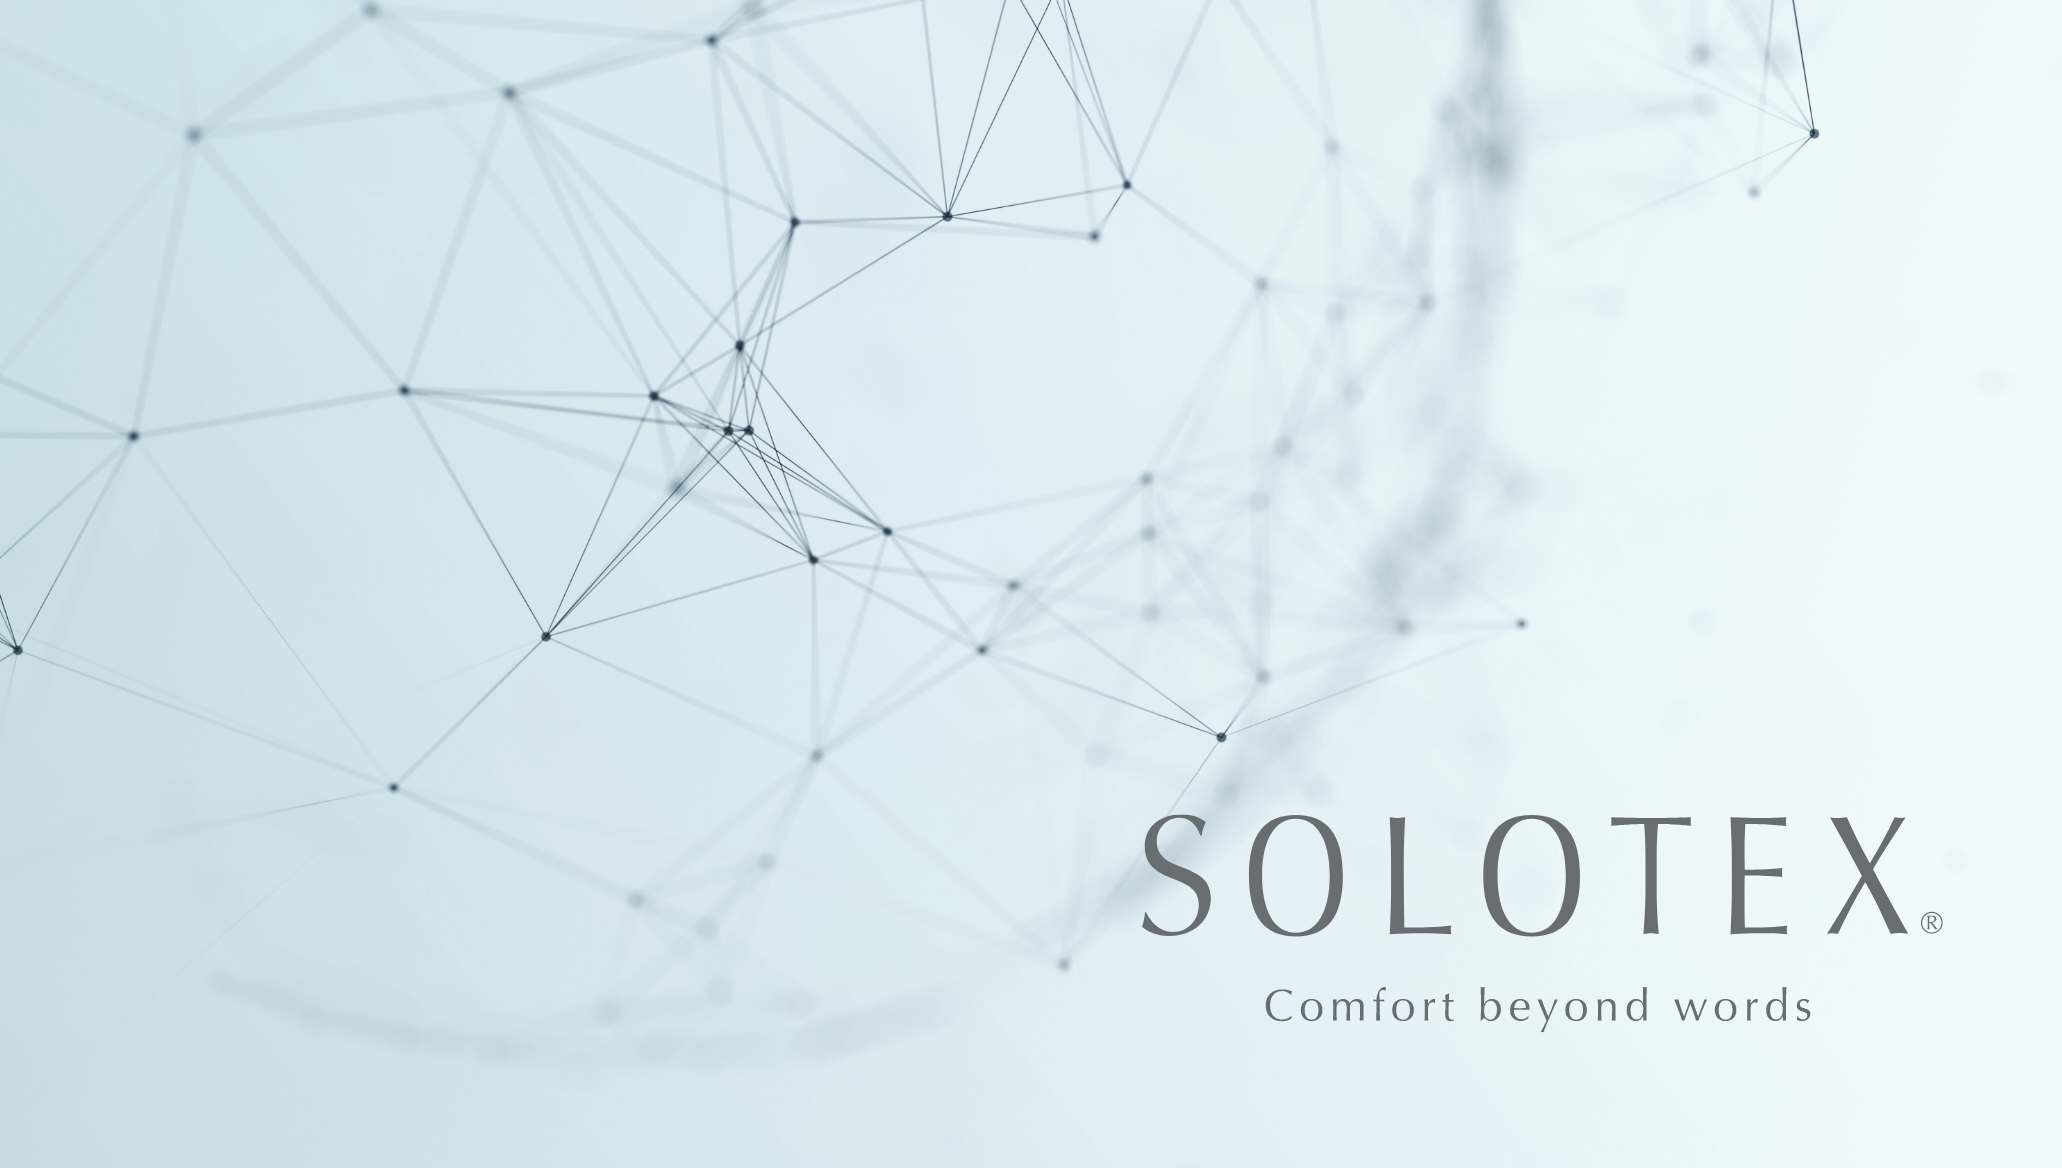 SOLOTEX® Comfort beyond words